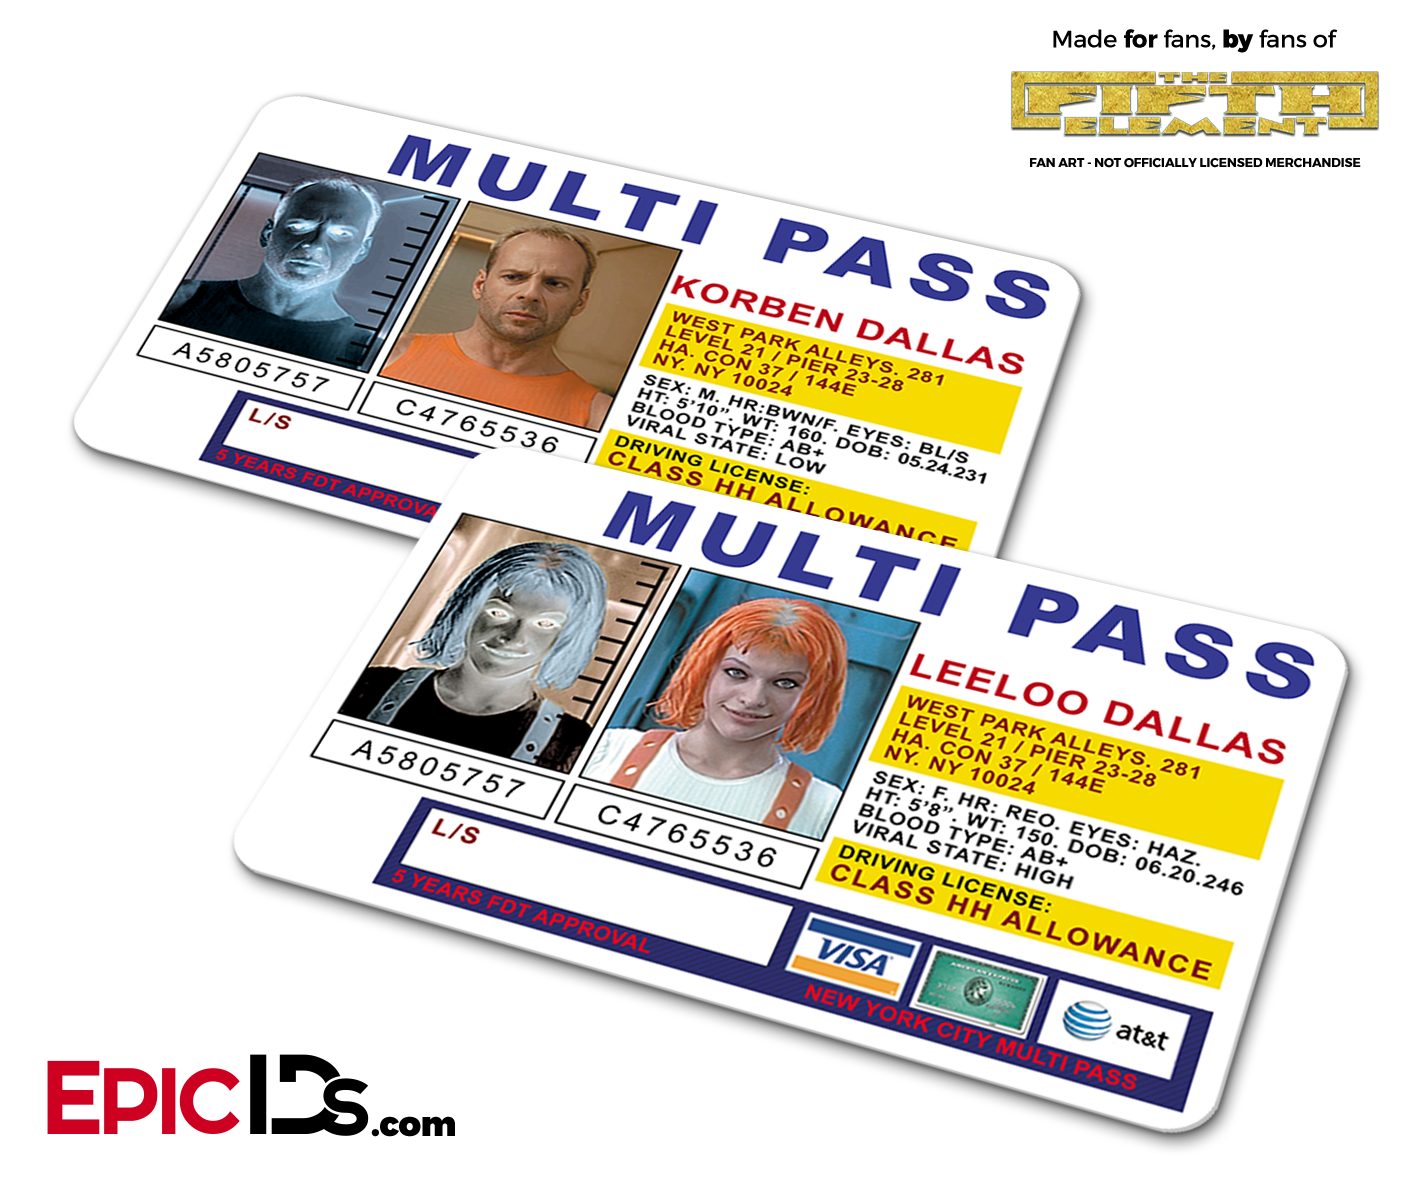 Multi Pass 'Fifth Element' Korban Dallas & Leeloo Dallas Couple Set